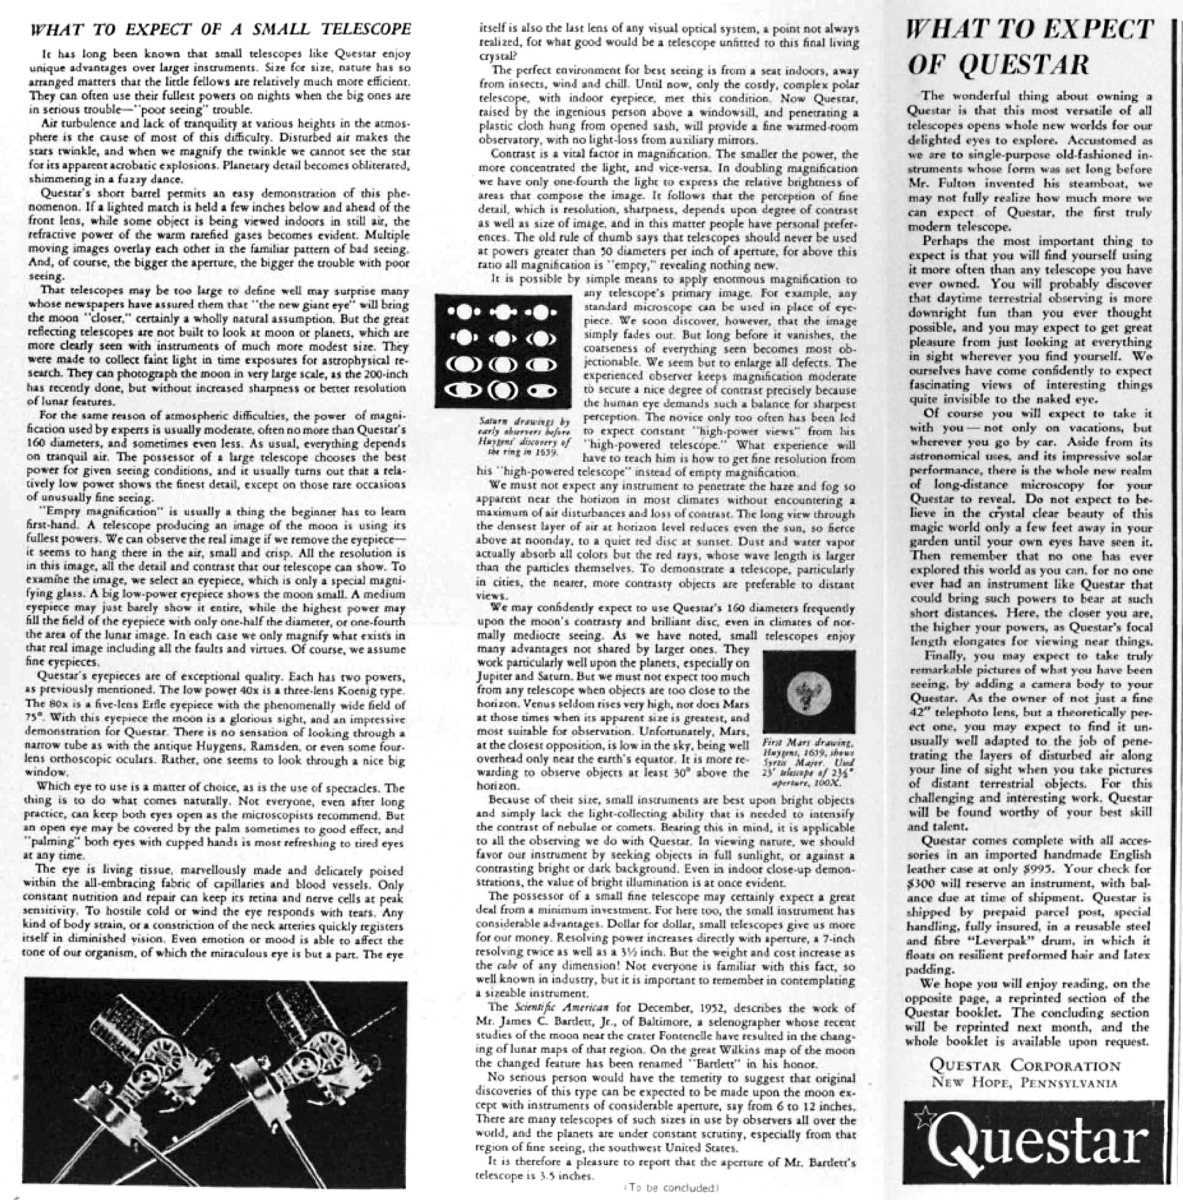 Questar advertisement, <em>Sky and Telescope</em>, March 1956